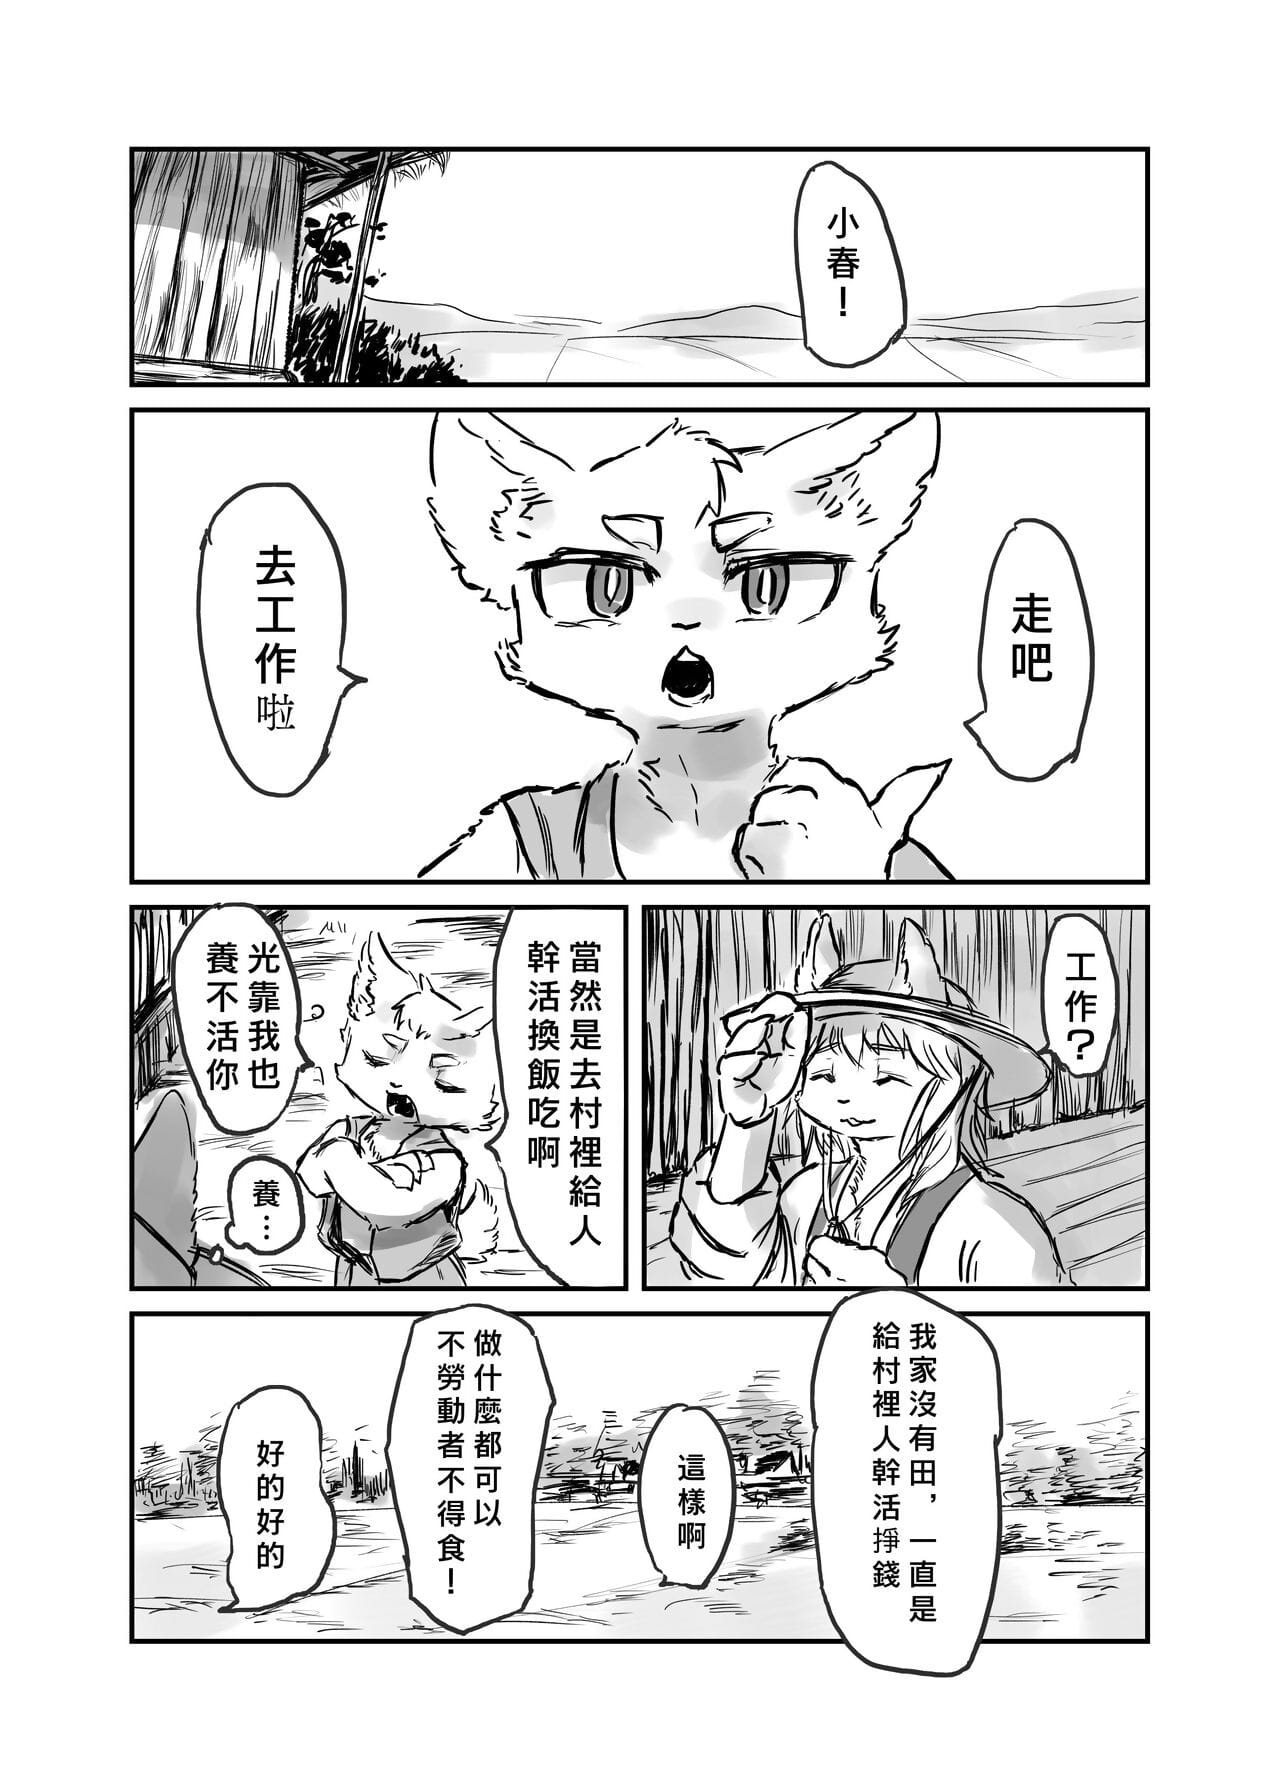 （the gość 他乡之人 by：鬼流 page 1